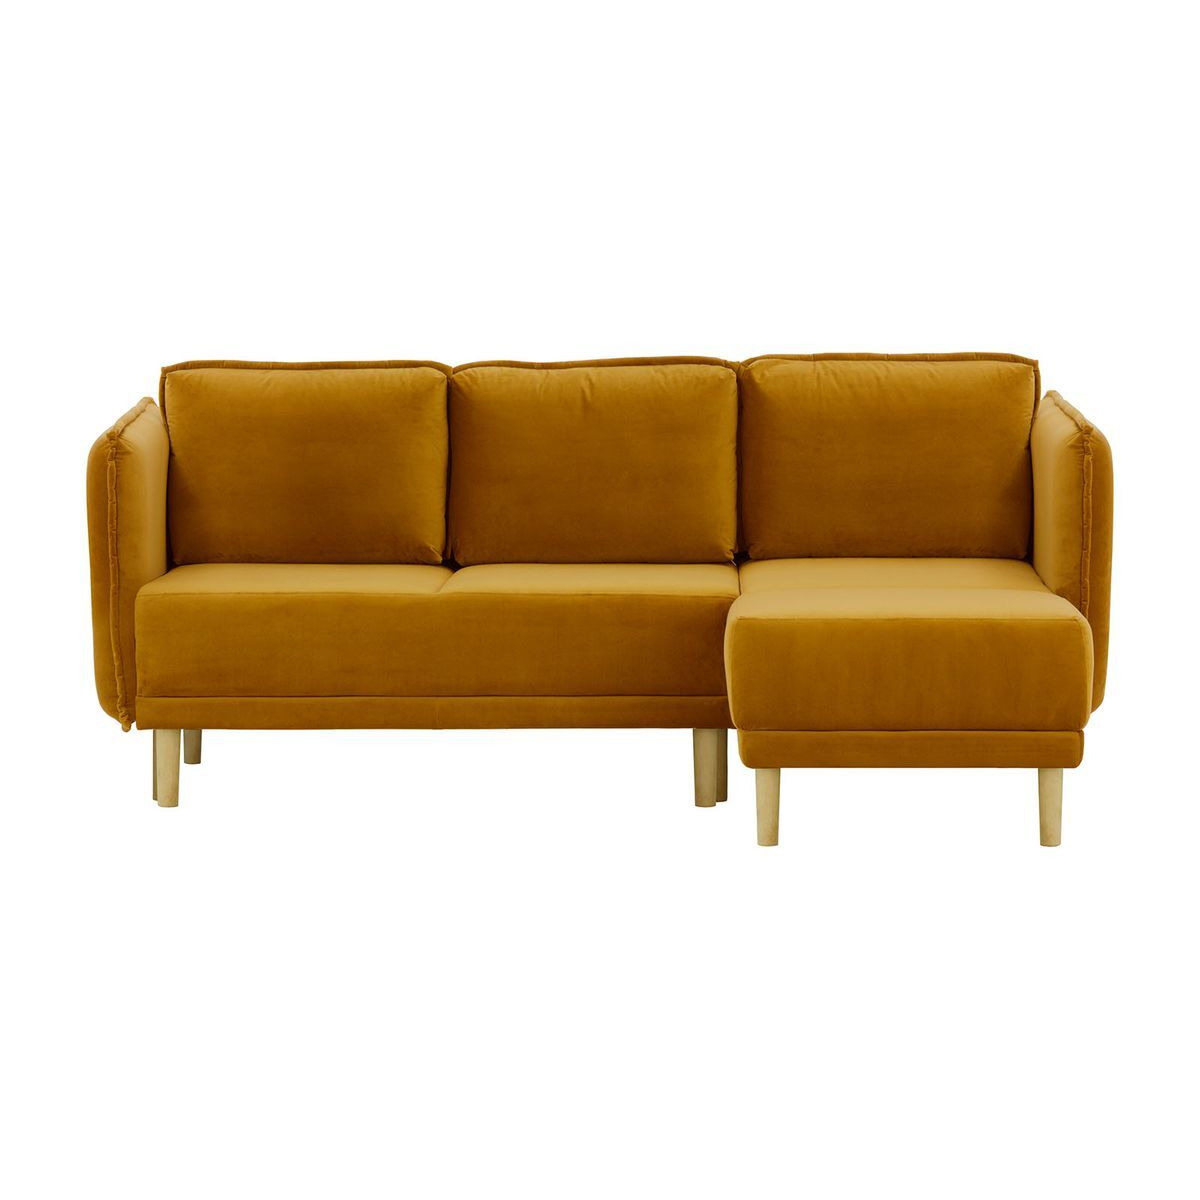 Swift Corner Sofa Bed, mustard - image 1